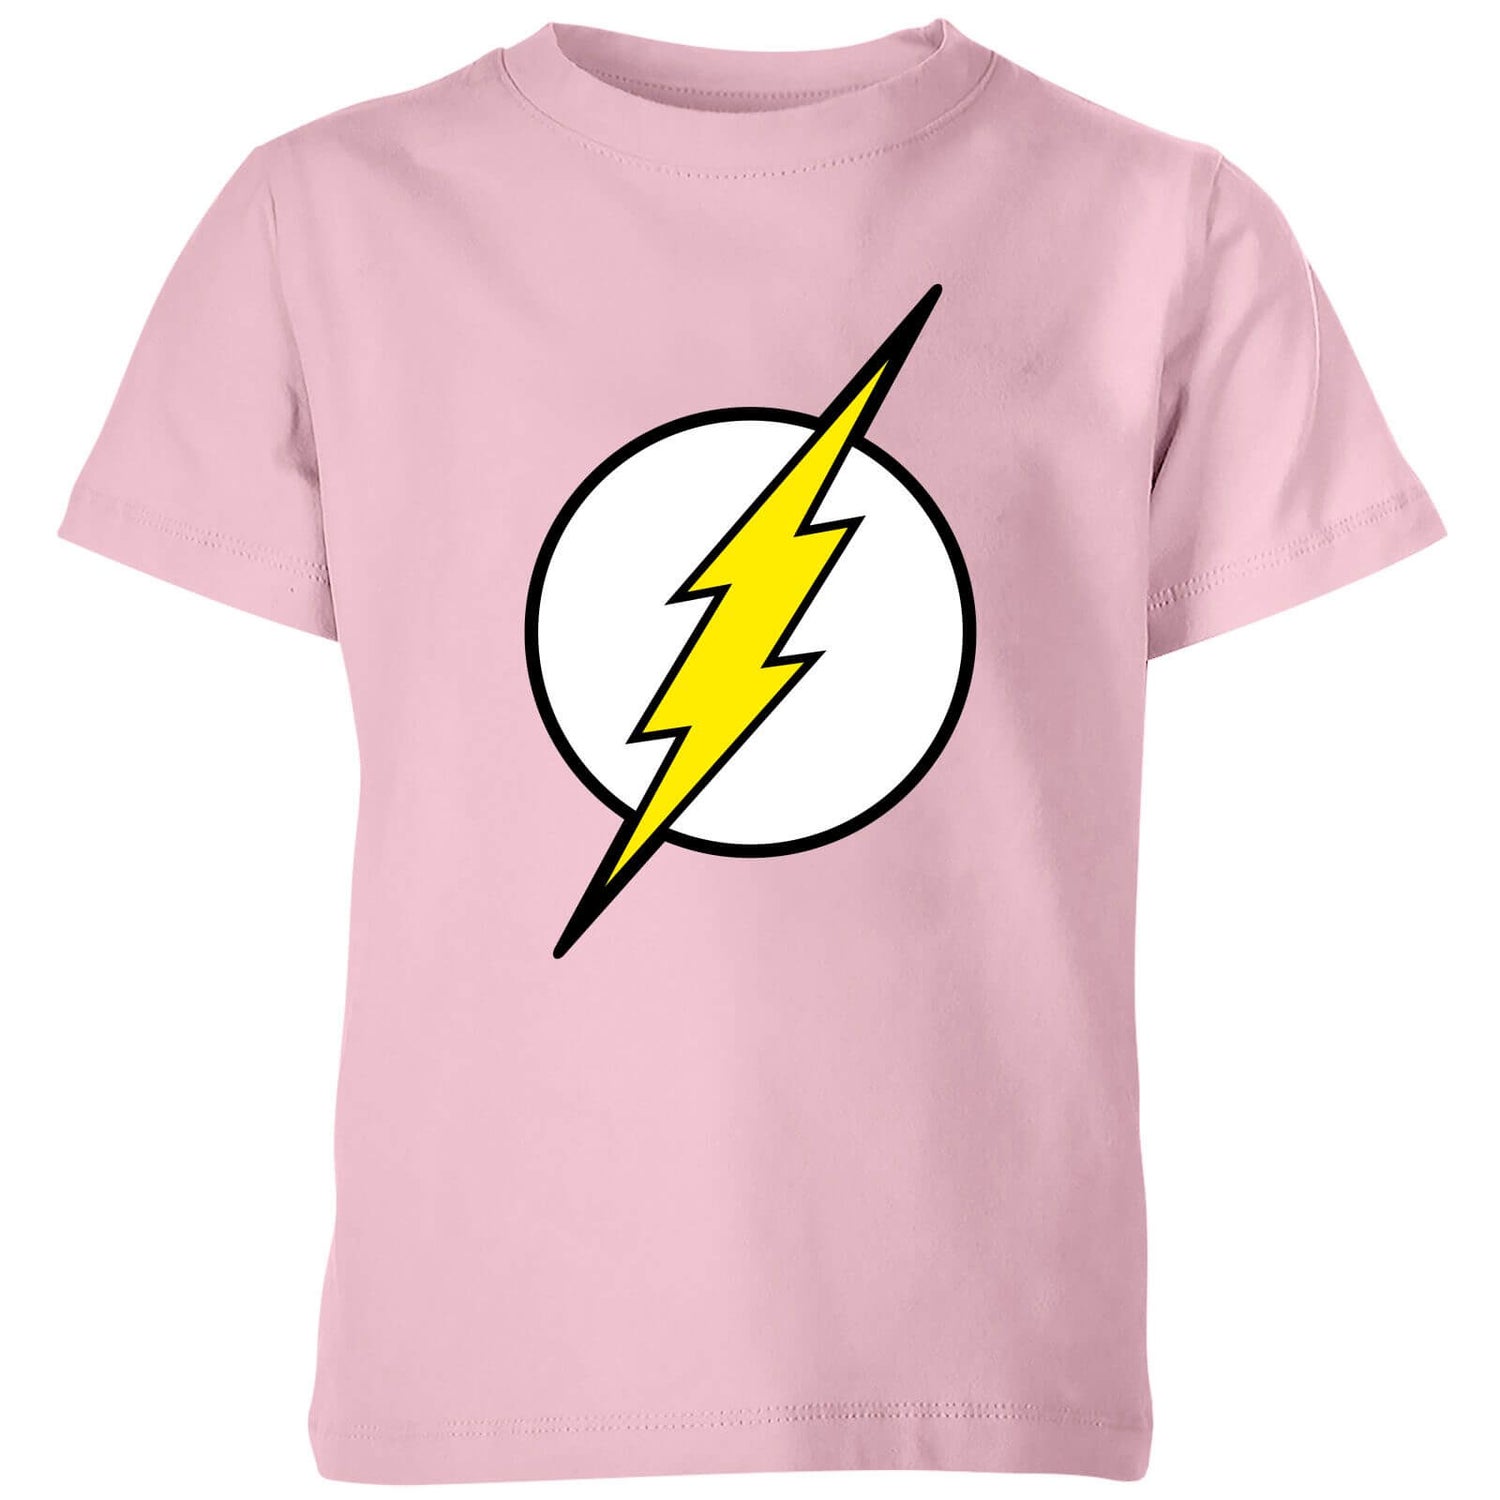 Justice League Flash Logo Kids' T-Shirt - Baby Pink